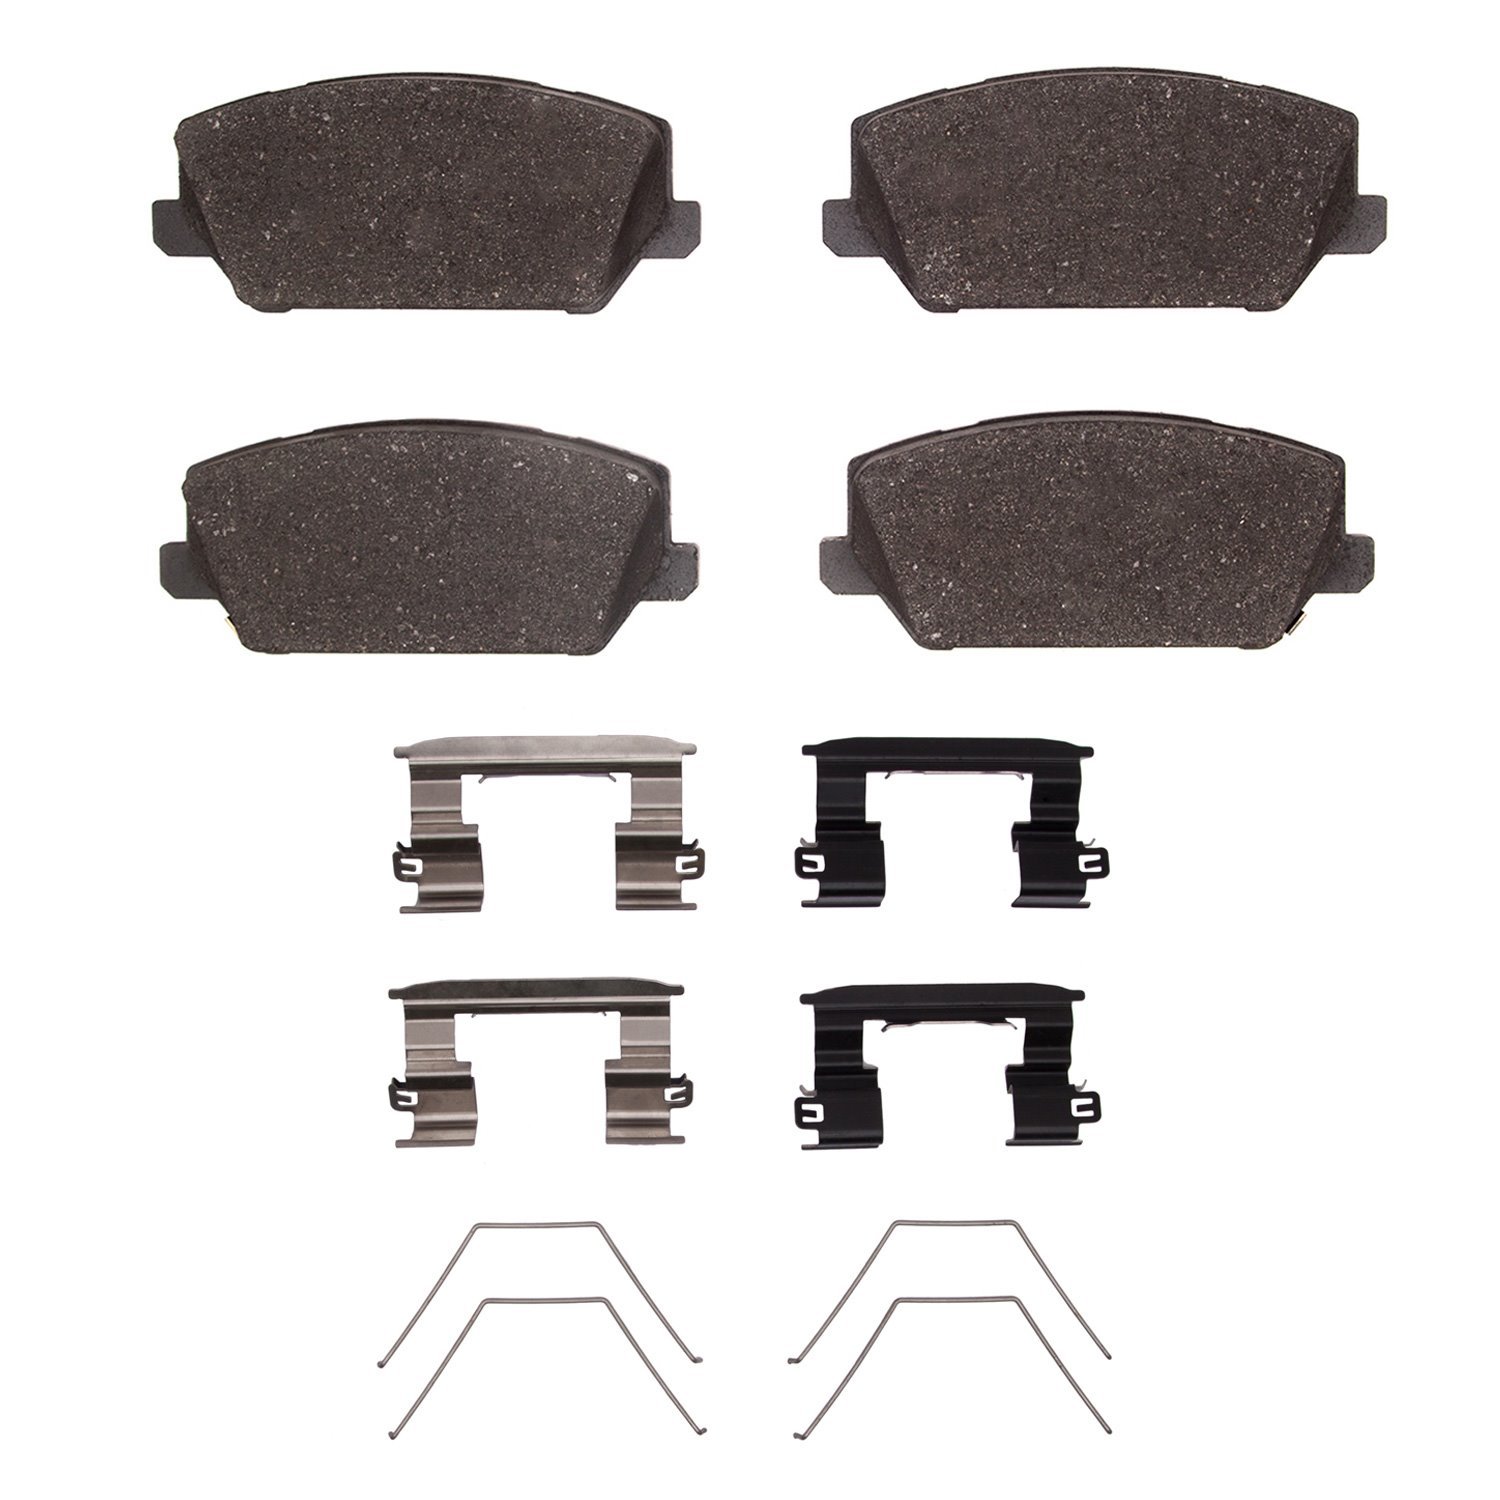 1551-2211-01 5000 Advanced Low-Metallic Brake Pads & Hardware Kit, Fits Select Kia/Hyundai/Genesis, Position: Front